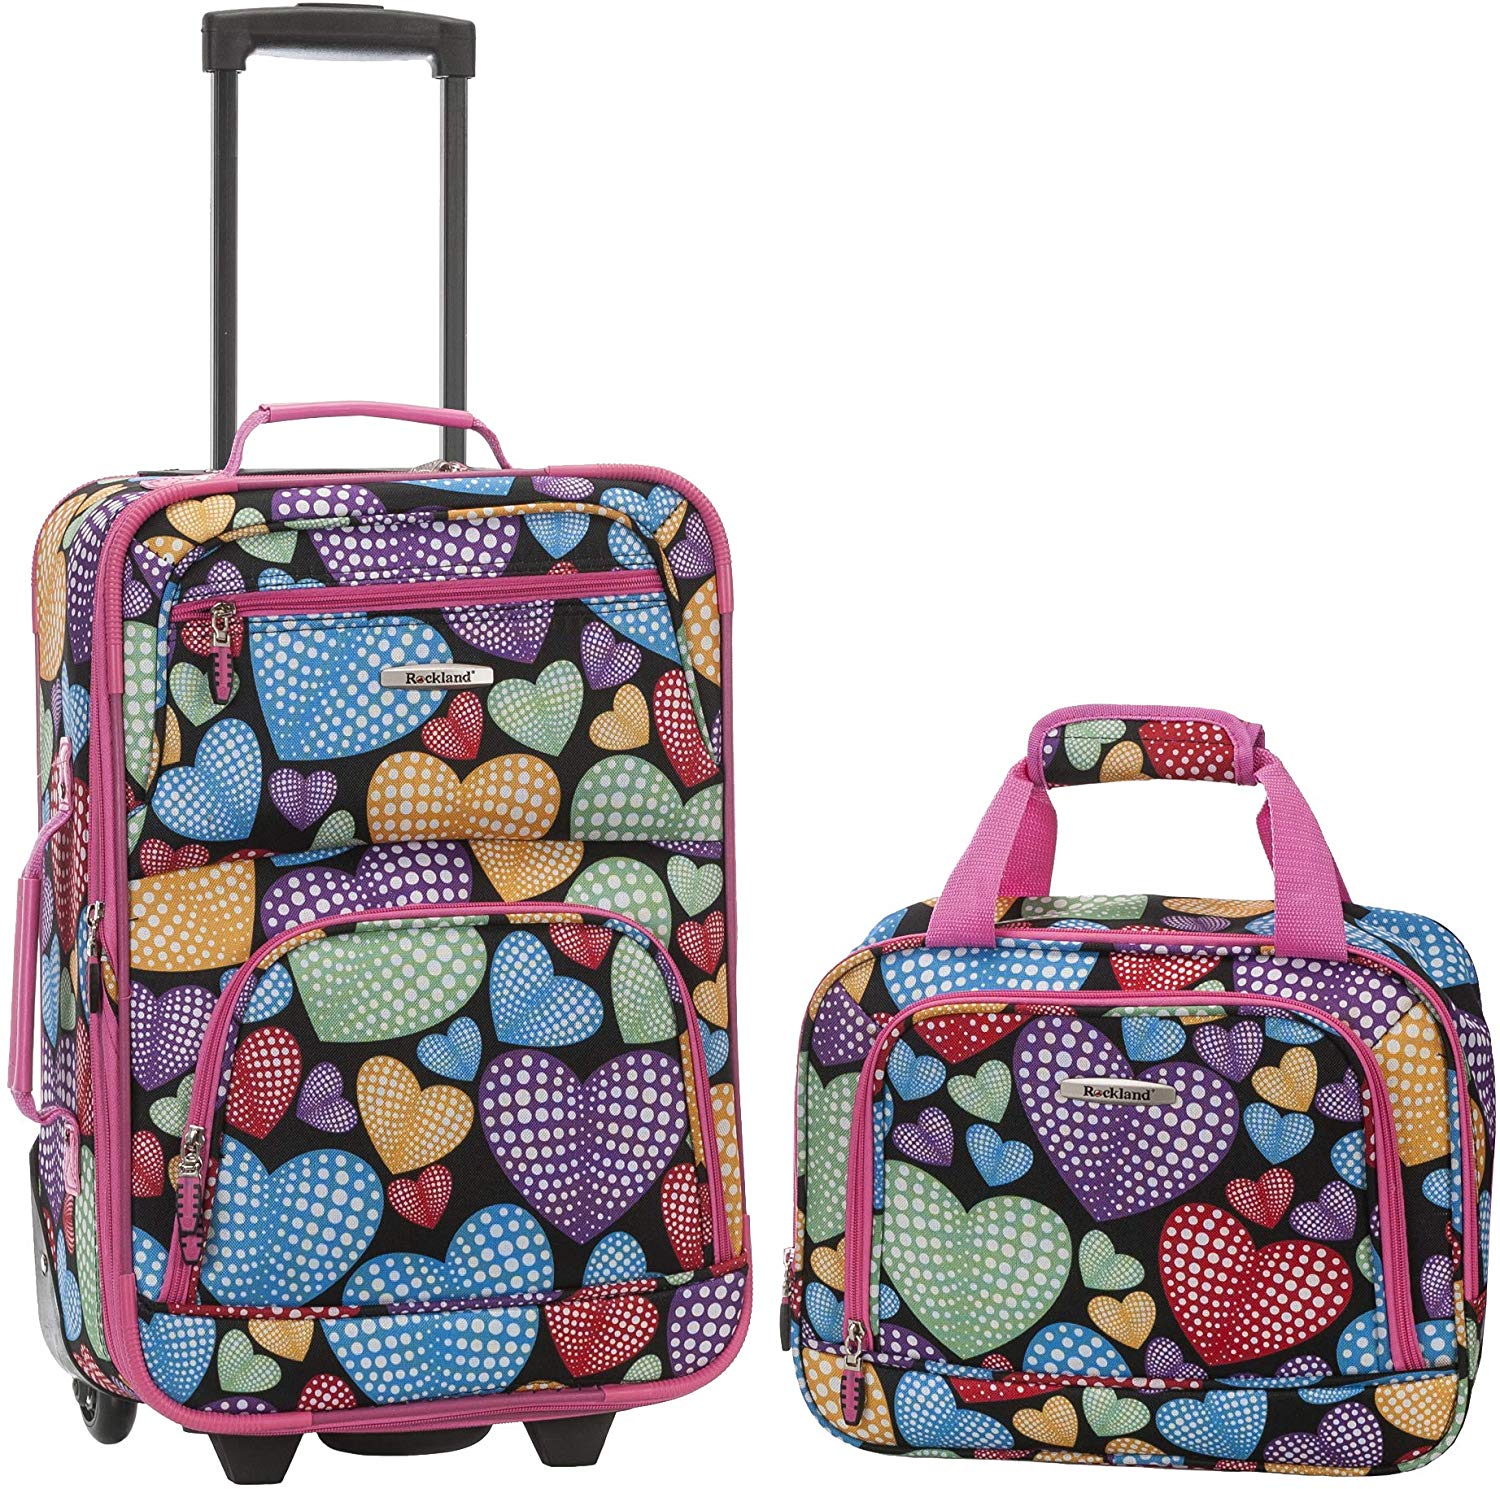 Rockland New Heart Softside Upright Kids Luggage Set, 2-Piece